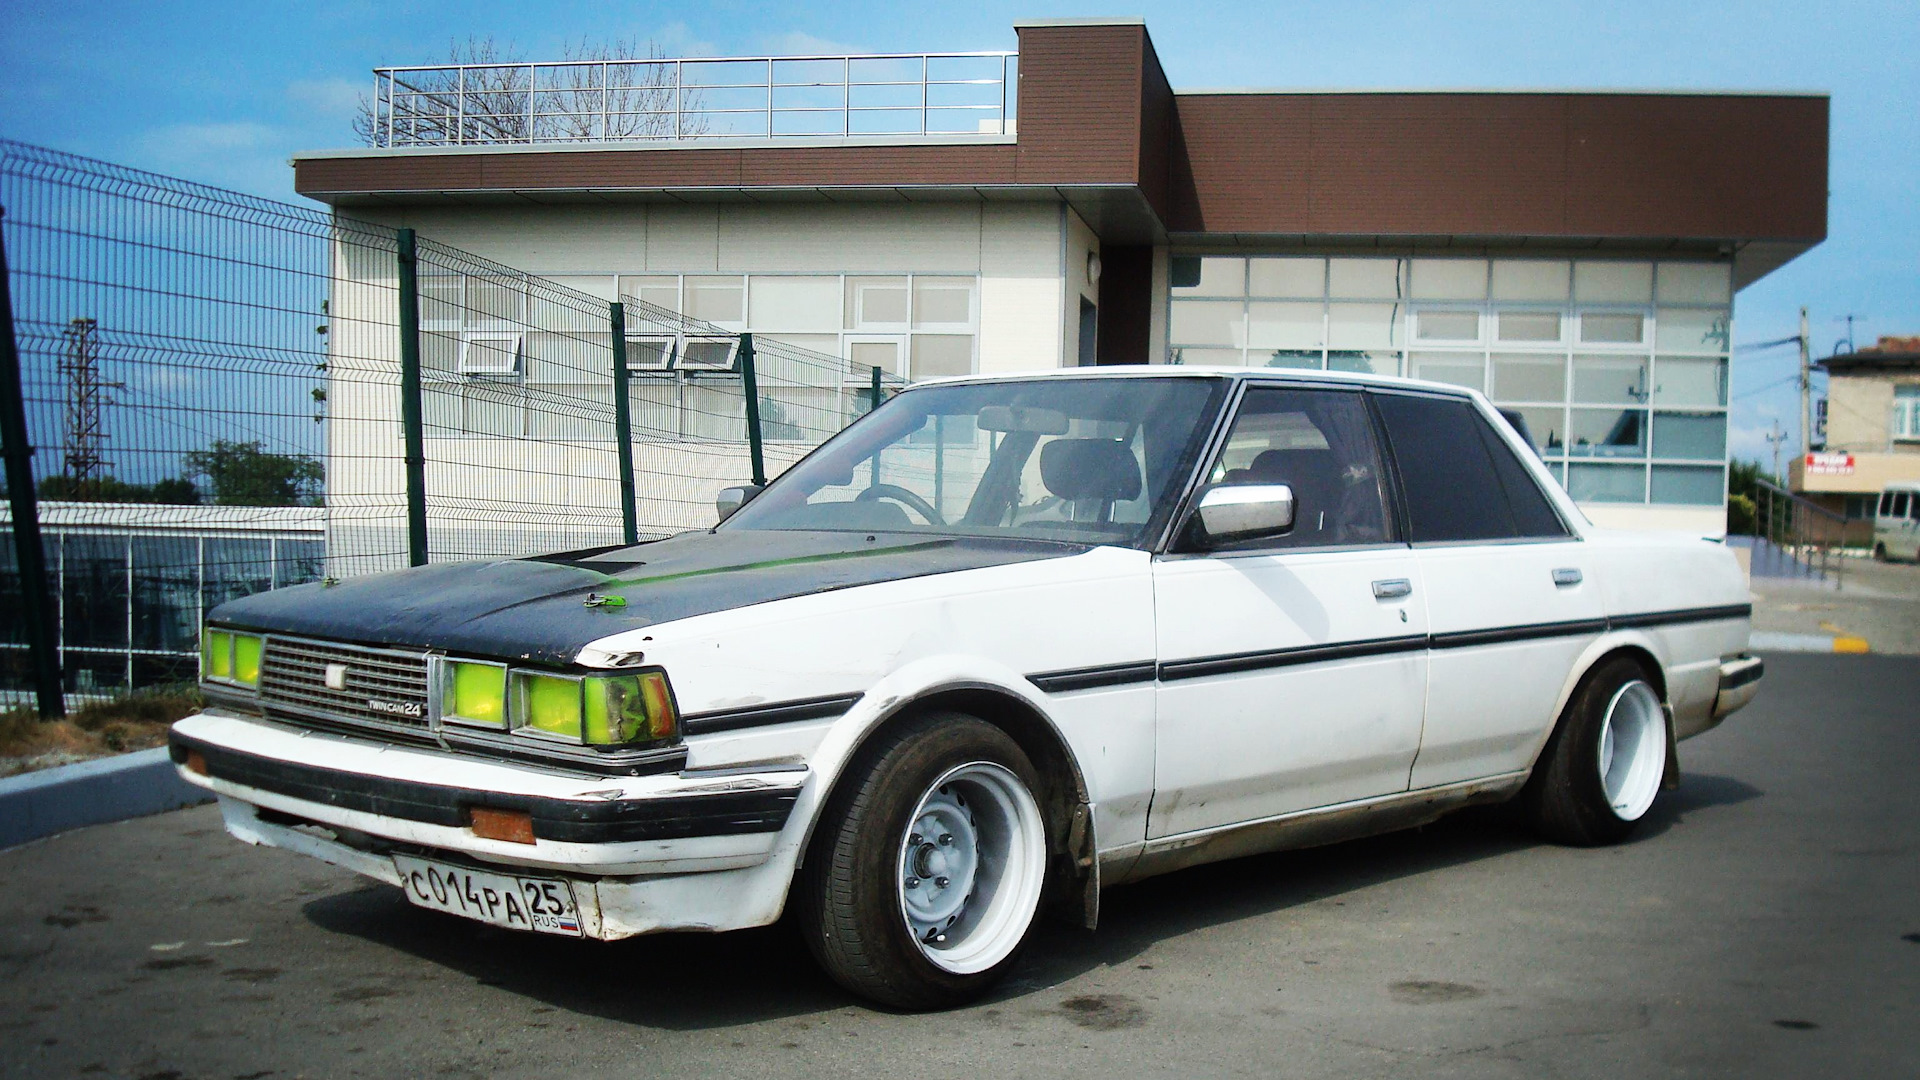 1985 Toyota Cresta gx71